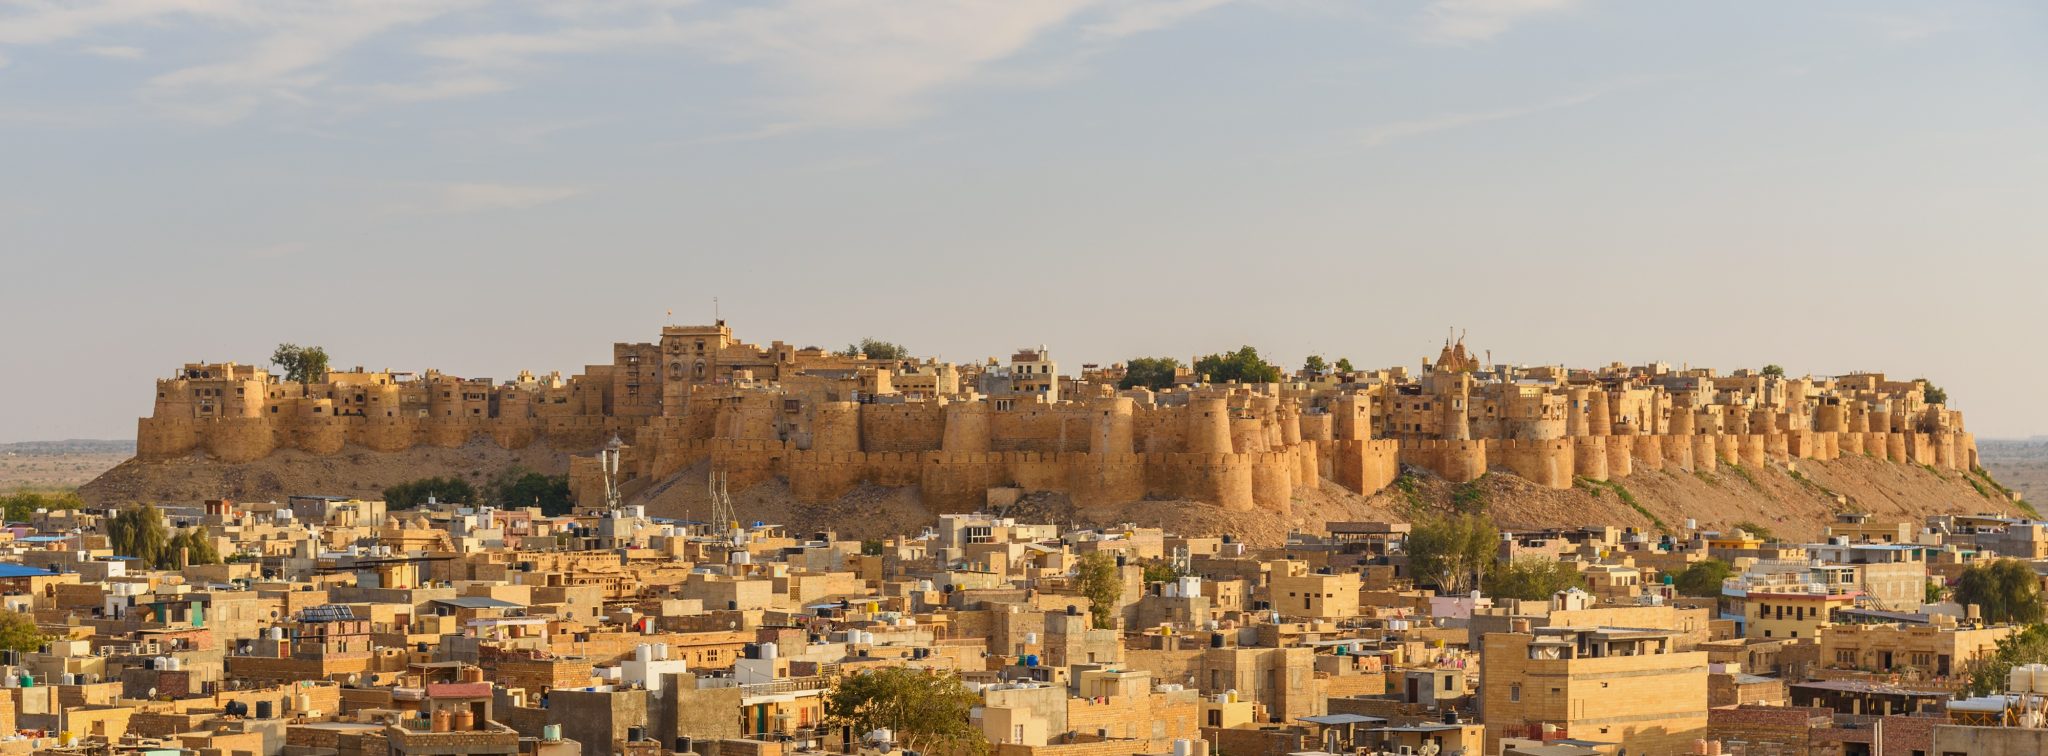 Jaisalmer panorama